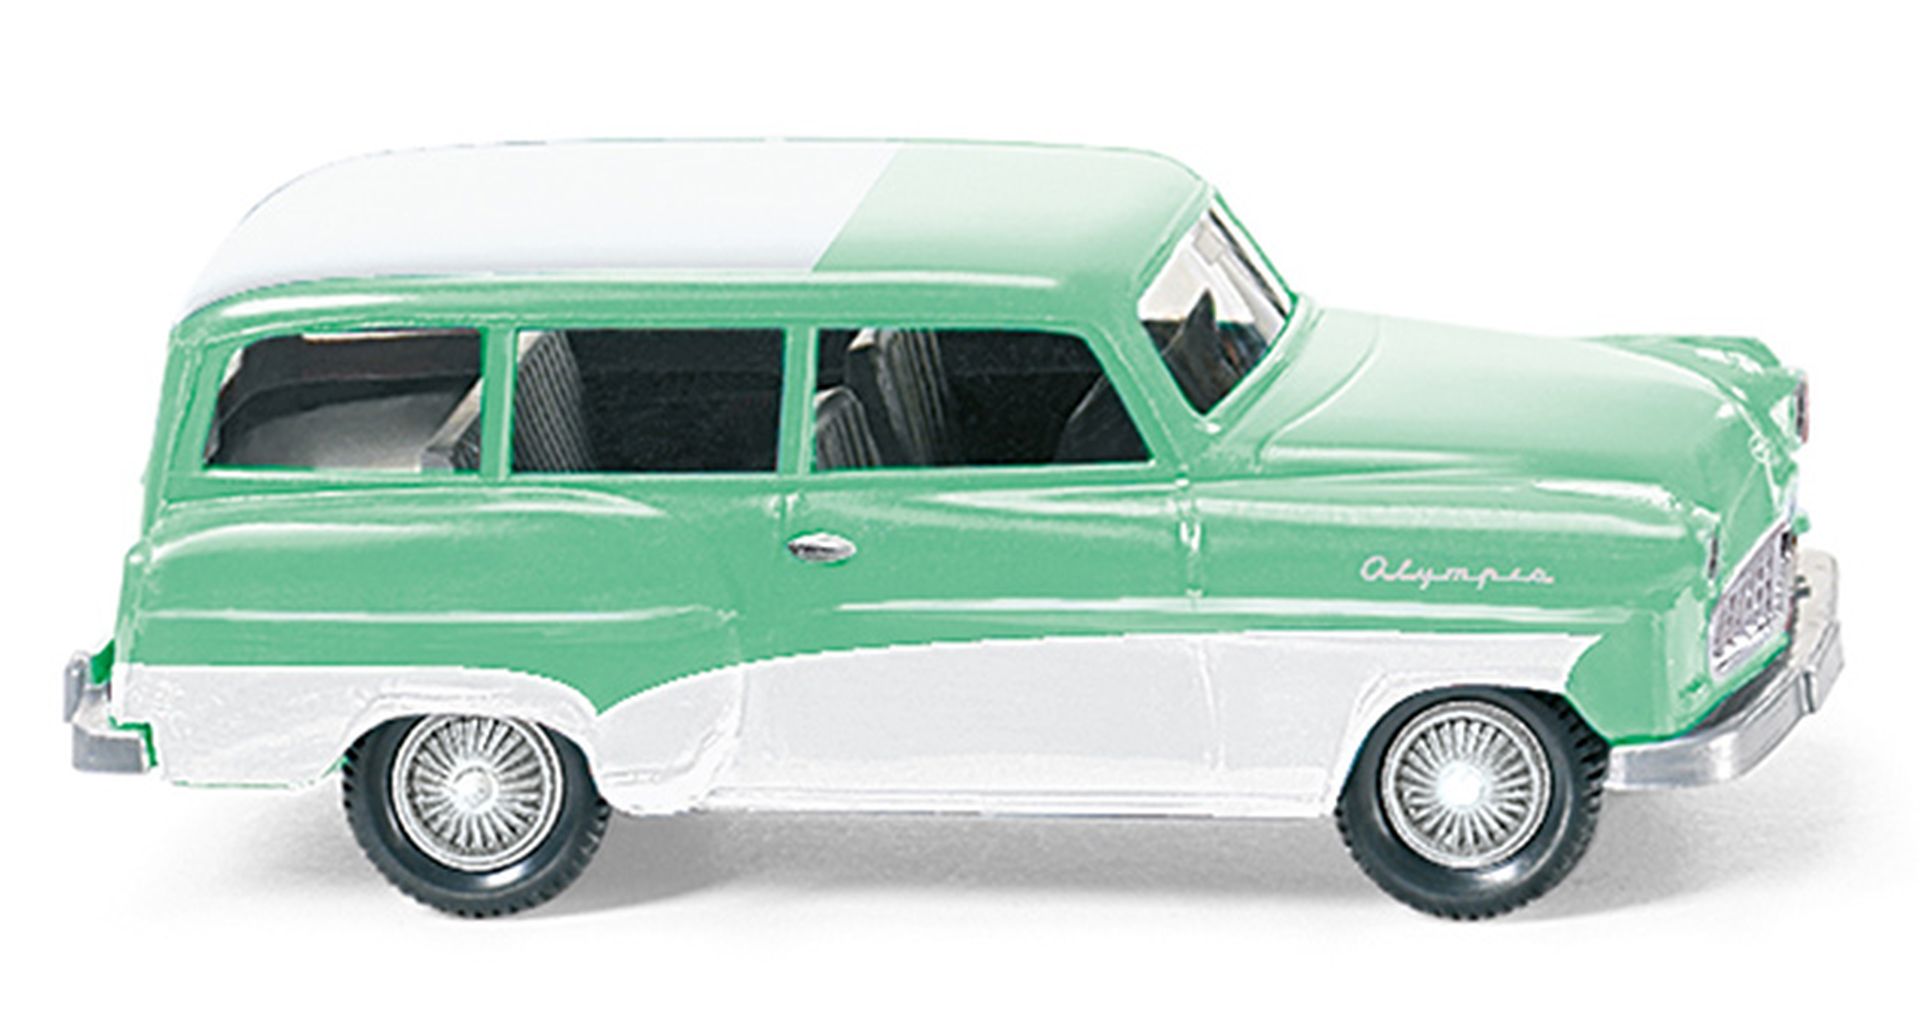 Wiking 085006 - Opel Caravan 1956 - mintgrün mit weißem Dach